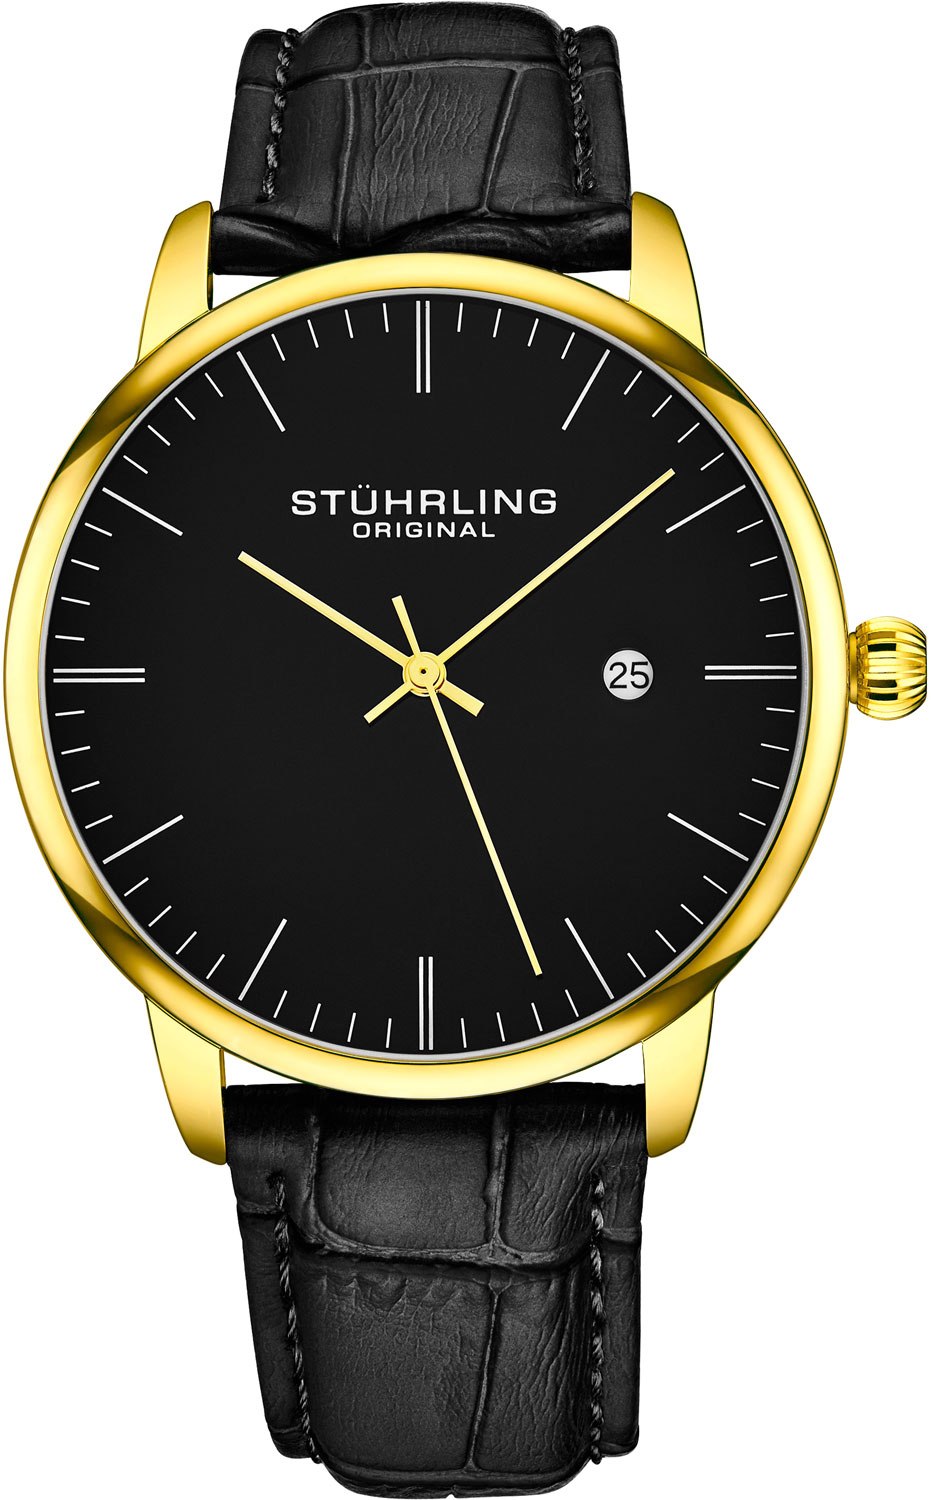   Stuhrling 3997.6